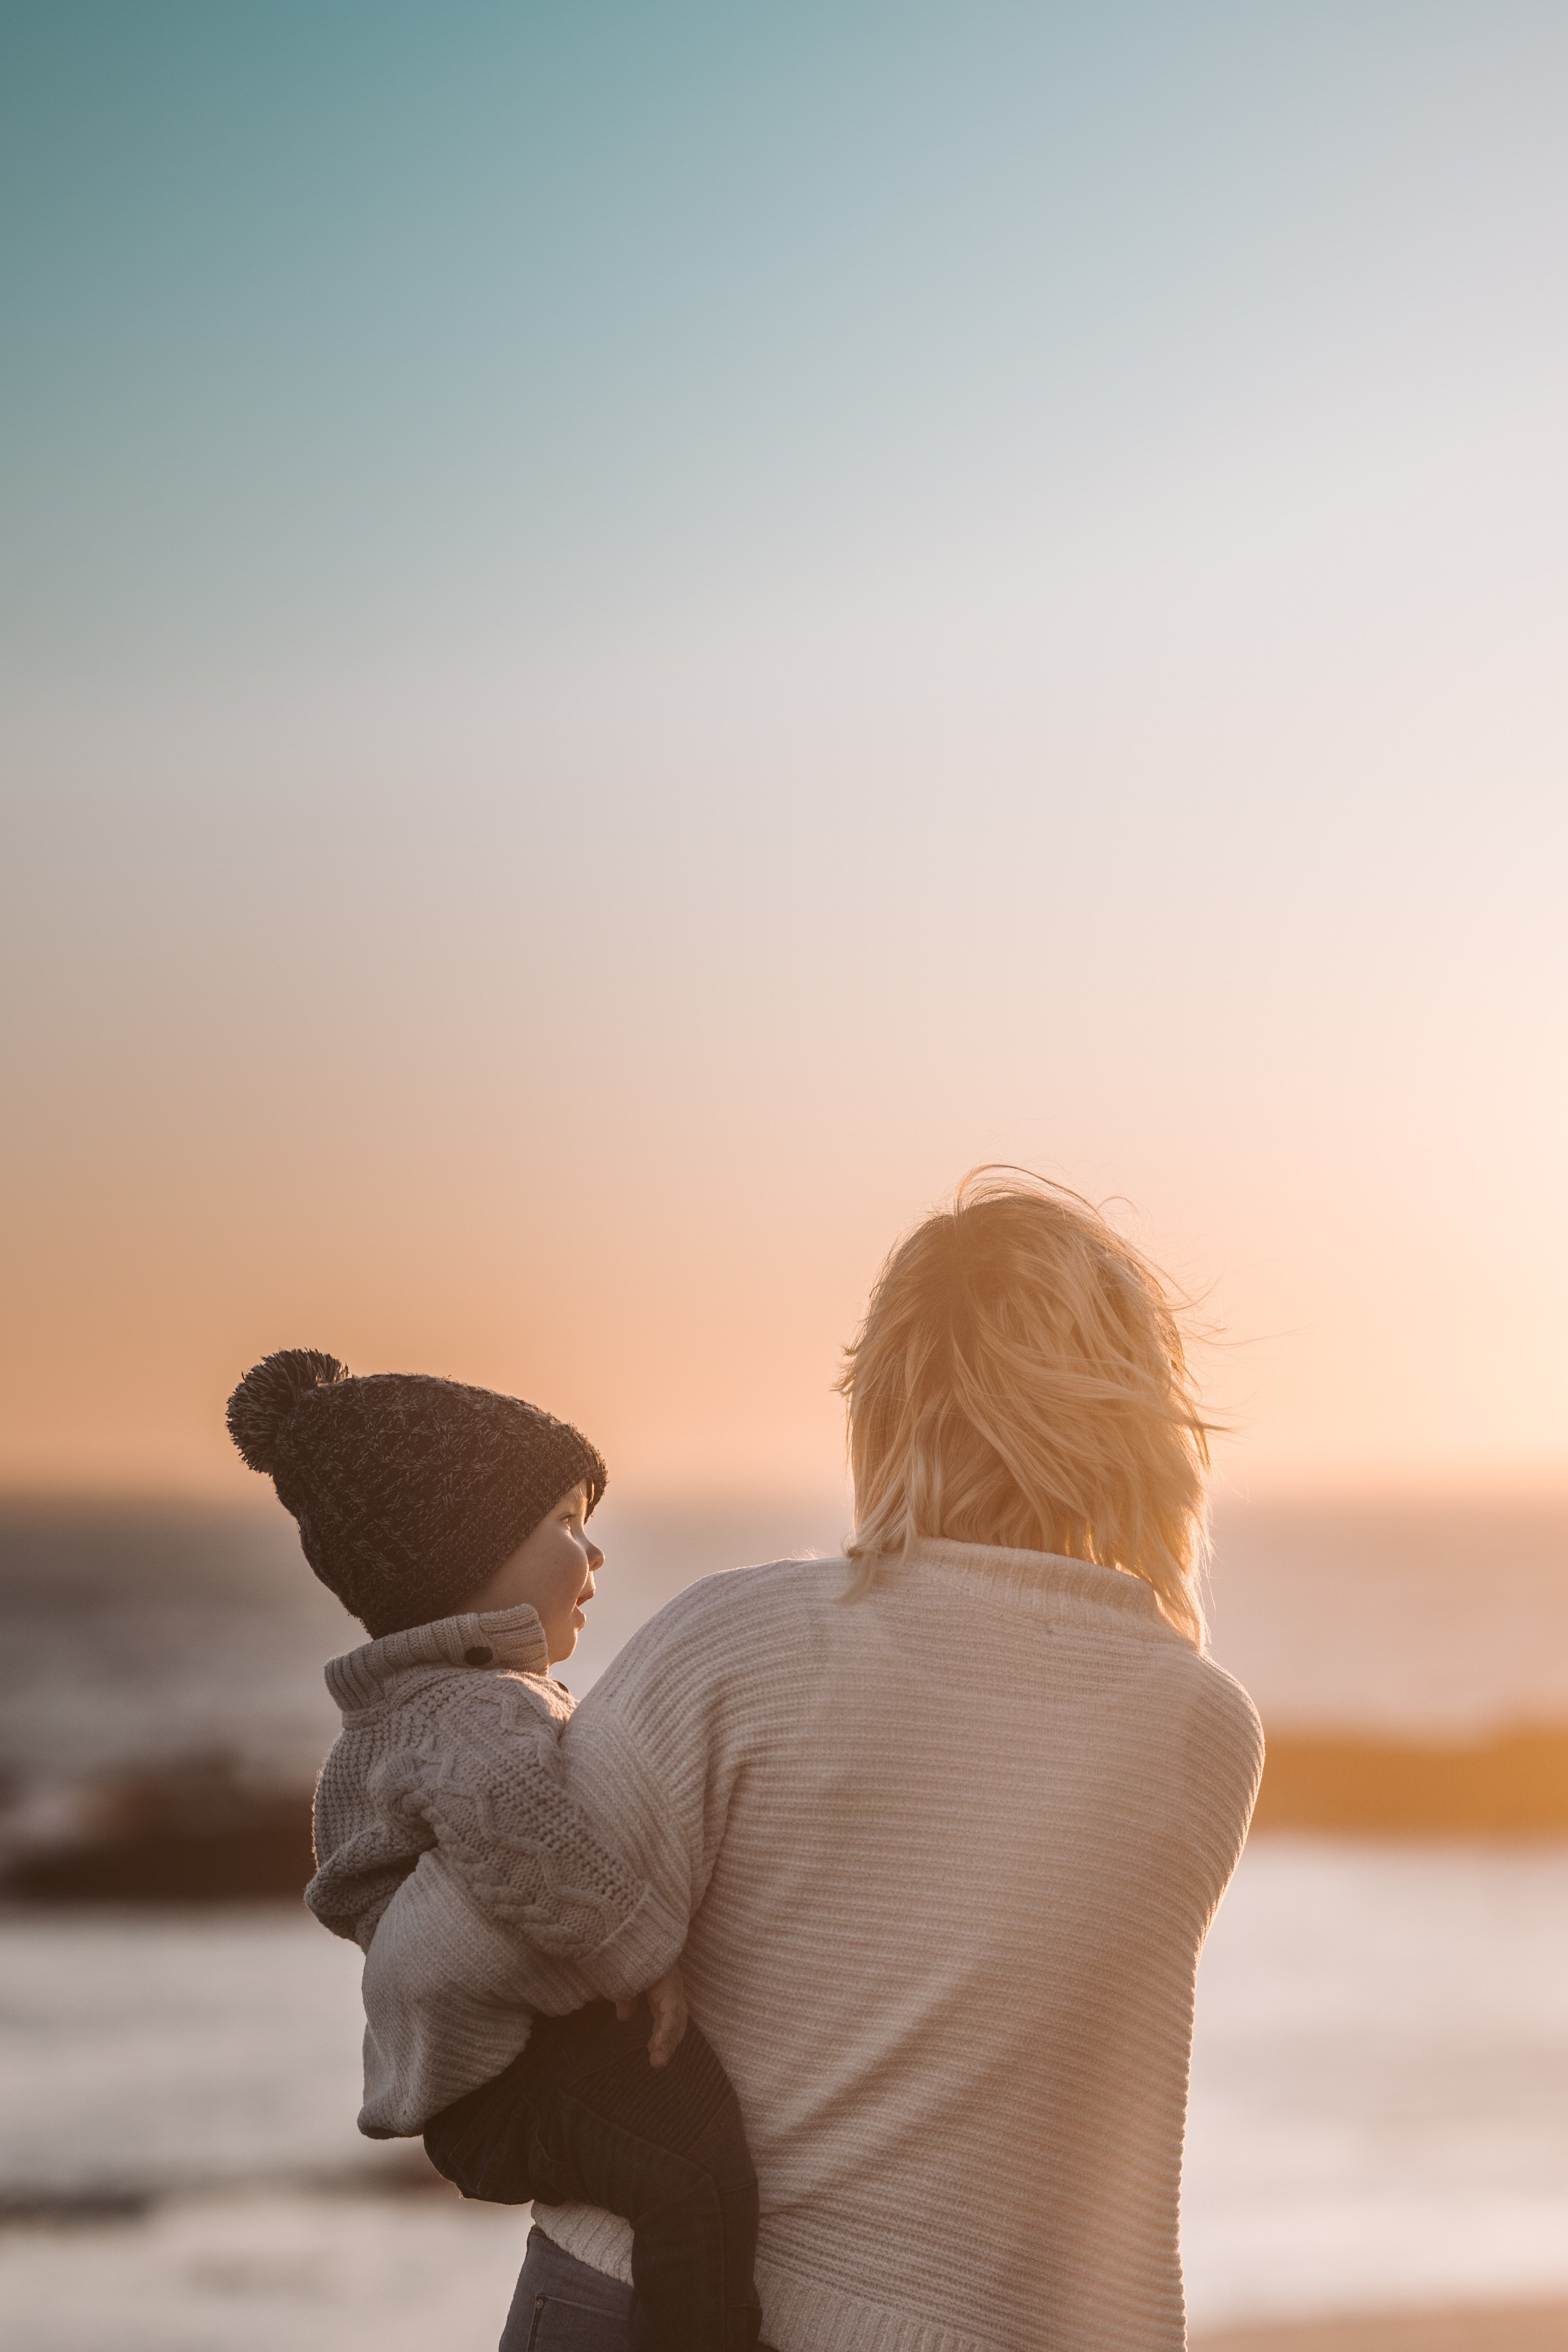 Frau mit ihrem Sohn im Arm | Quelle: Pexels